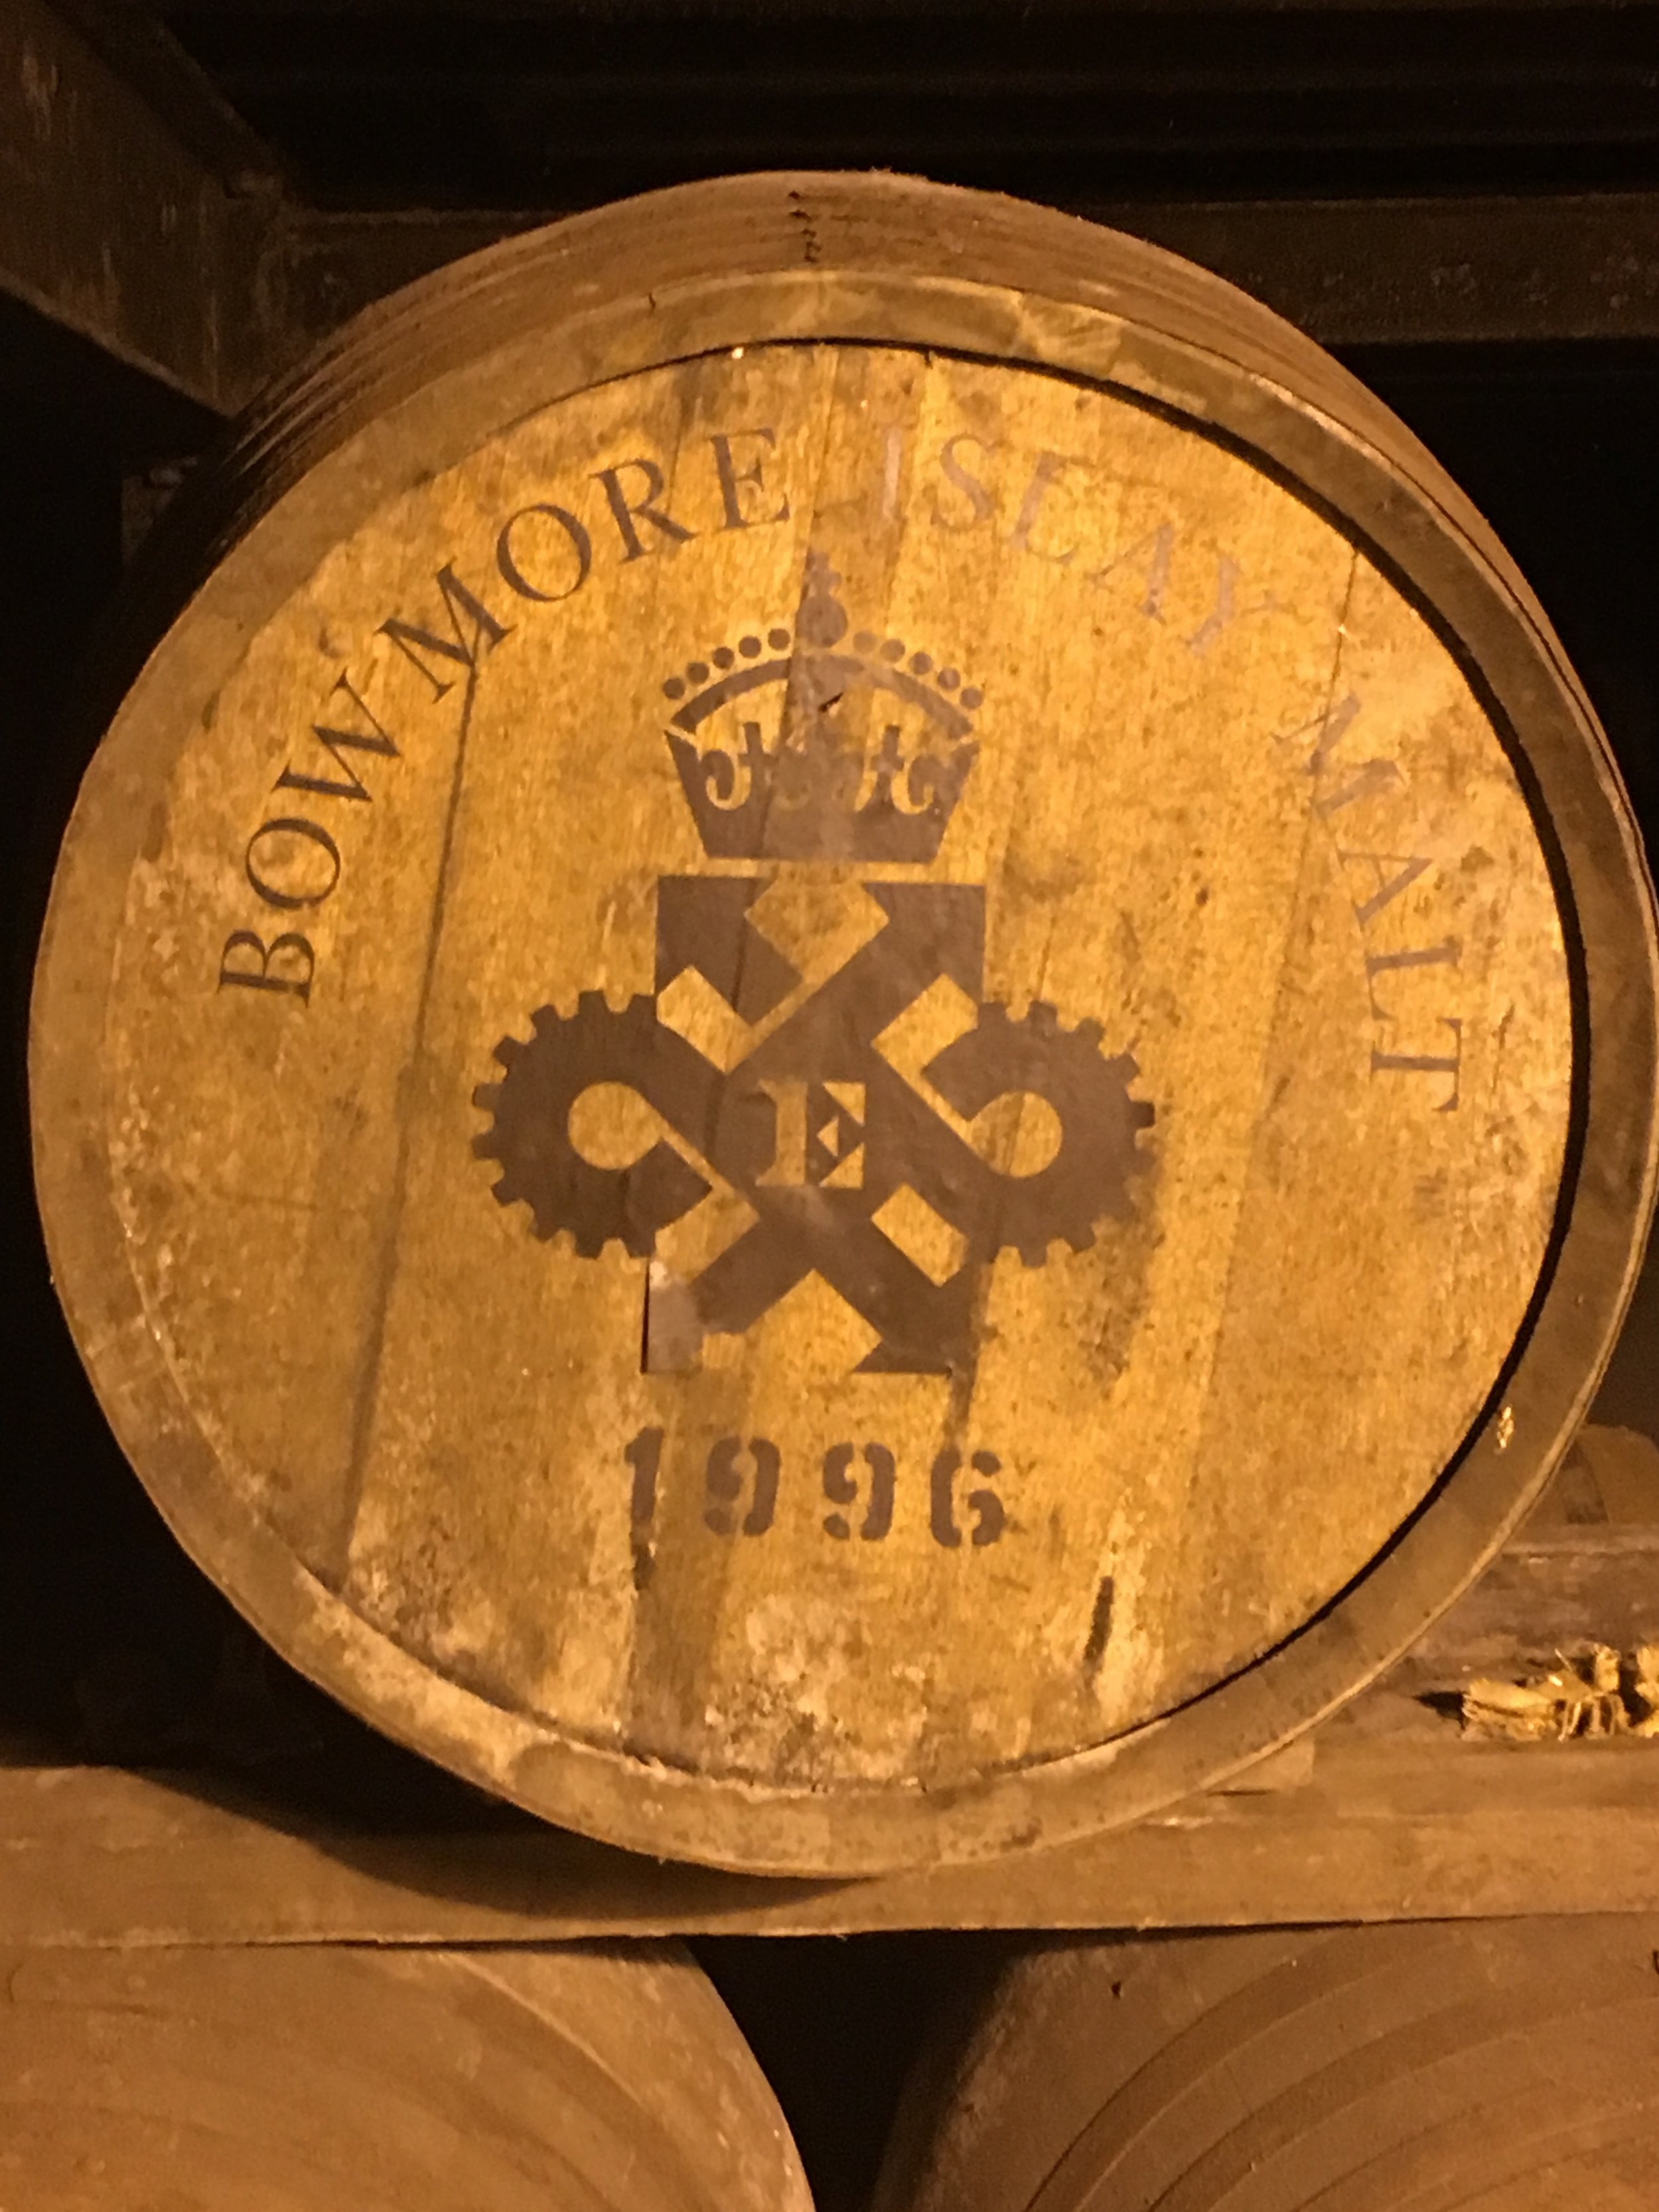 Maturing Cask at Bowmore Distillery